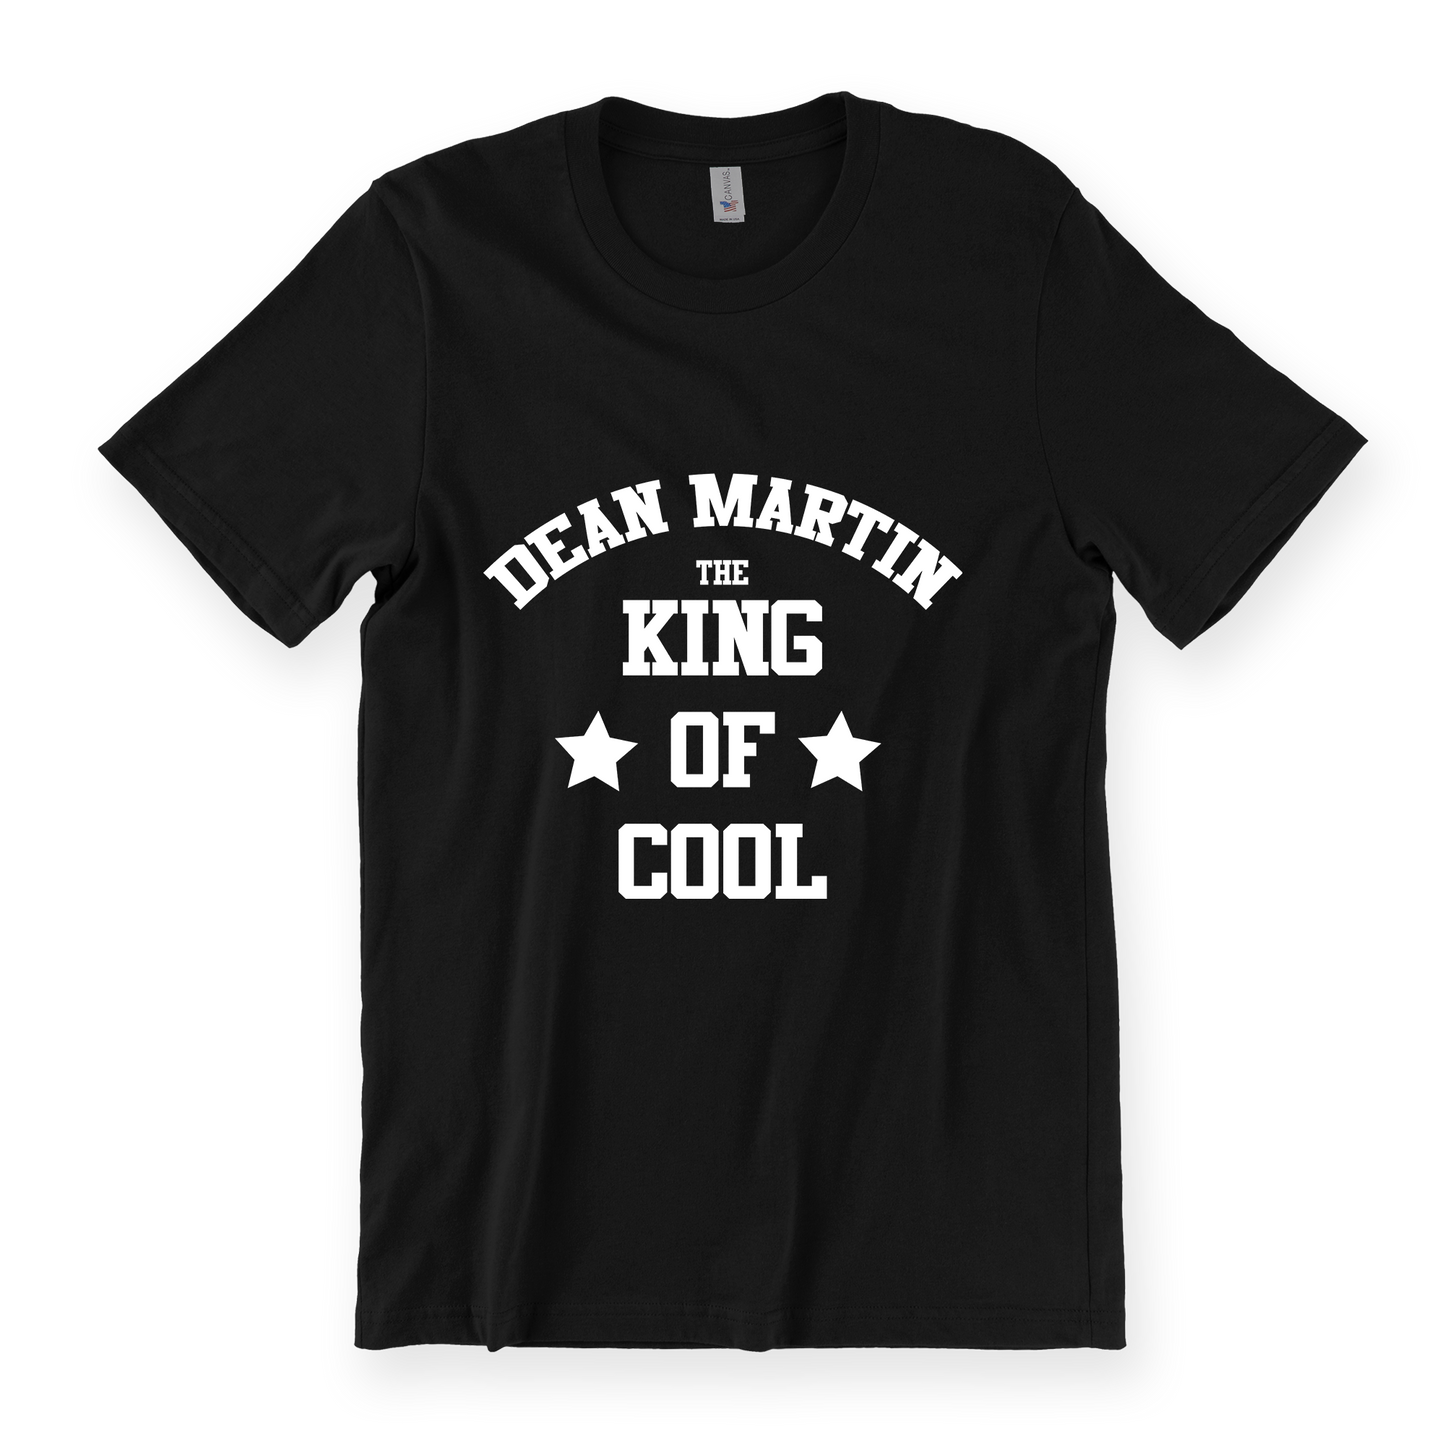 King of Cool Tee - Black